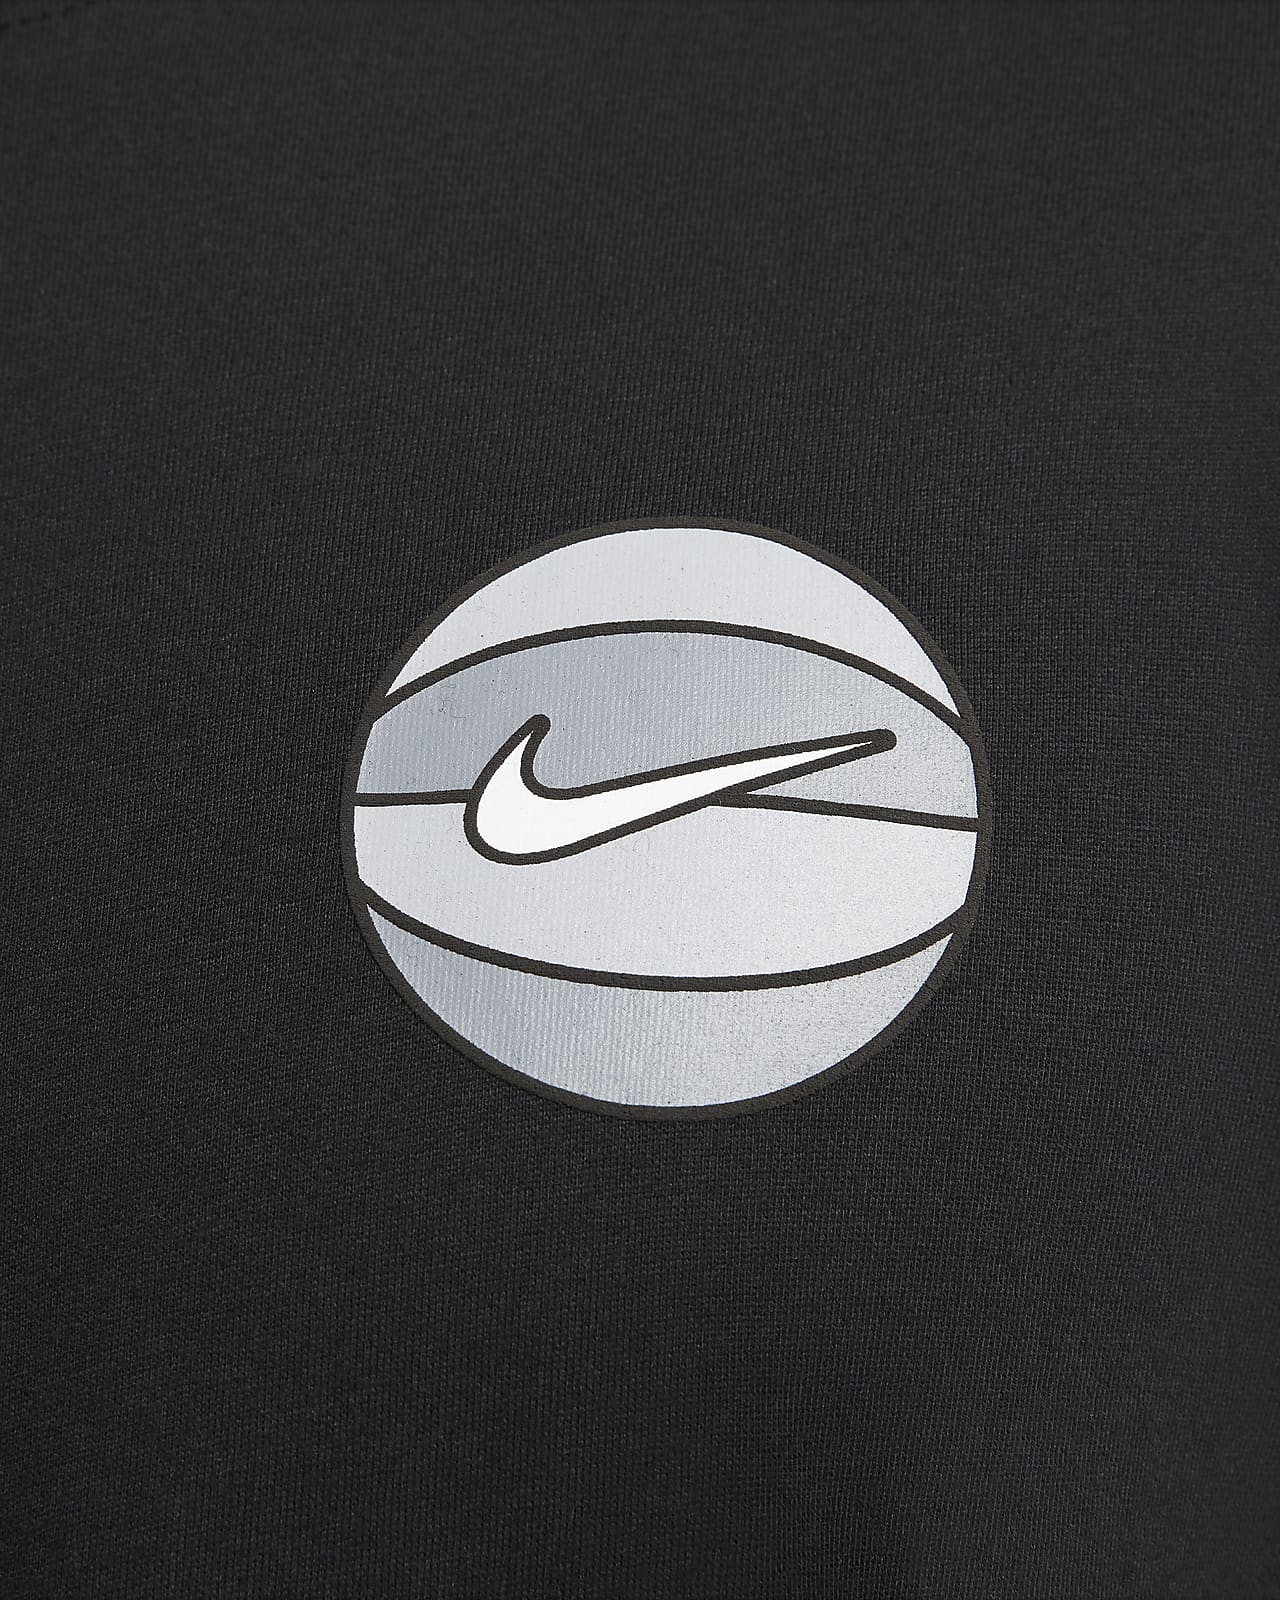 Nike Men's Basketball T-Shirt.